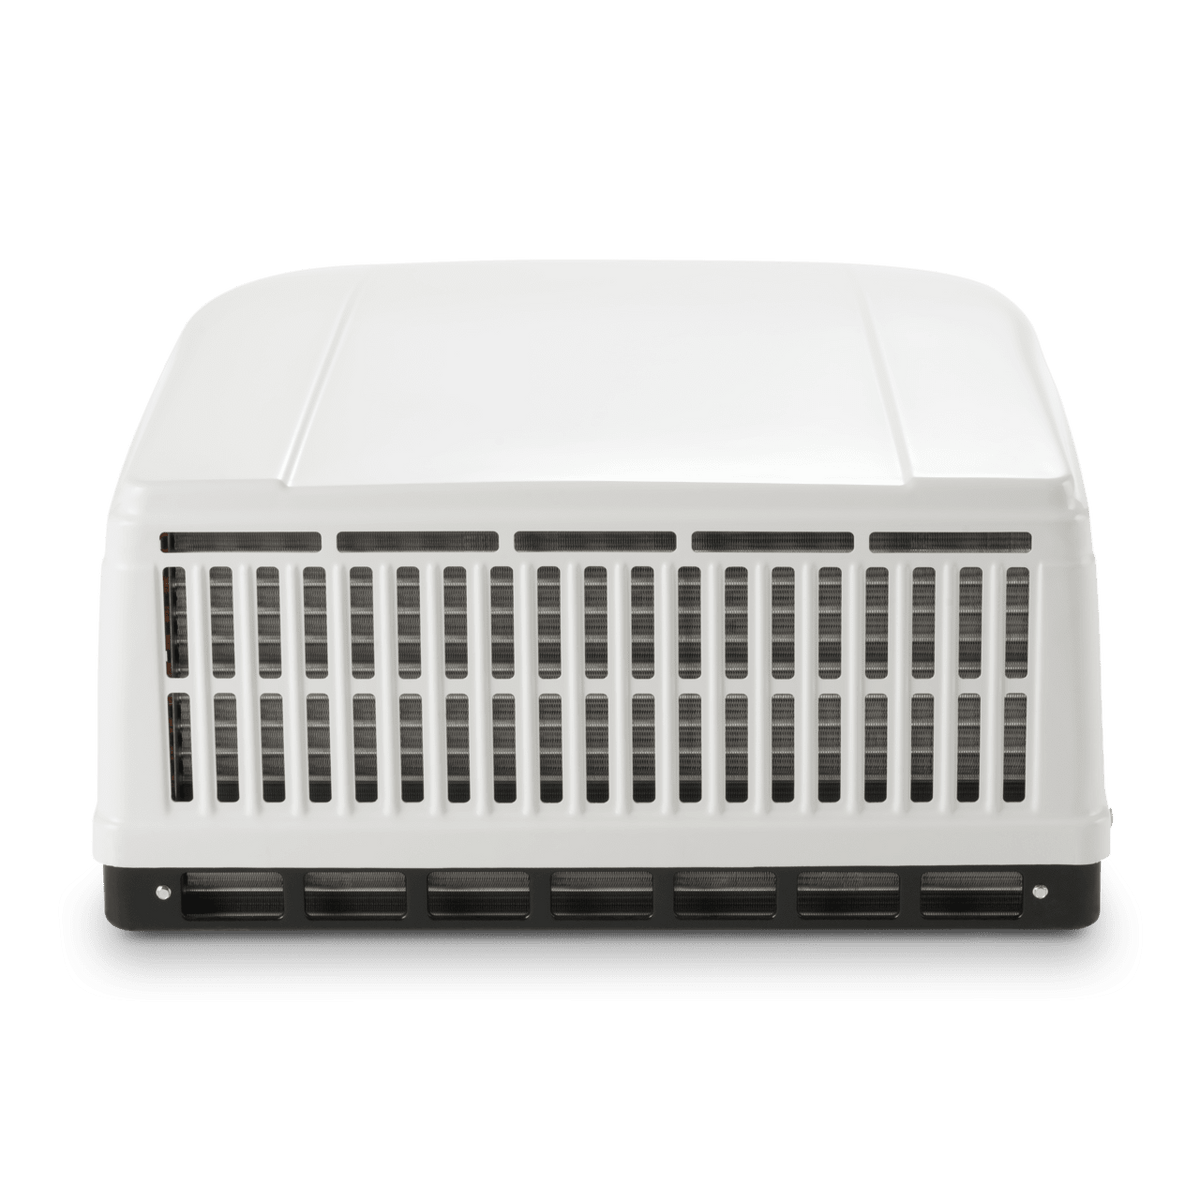 Dometic Brisk II Commercial Grade Air Conditioner w/ Air Distribution Box - 15,000 BTU - White - B79516.XX1C0